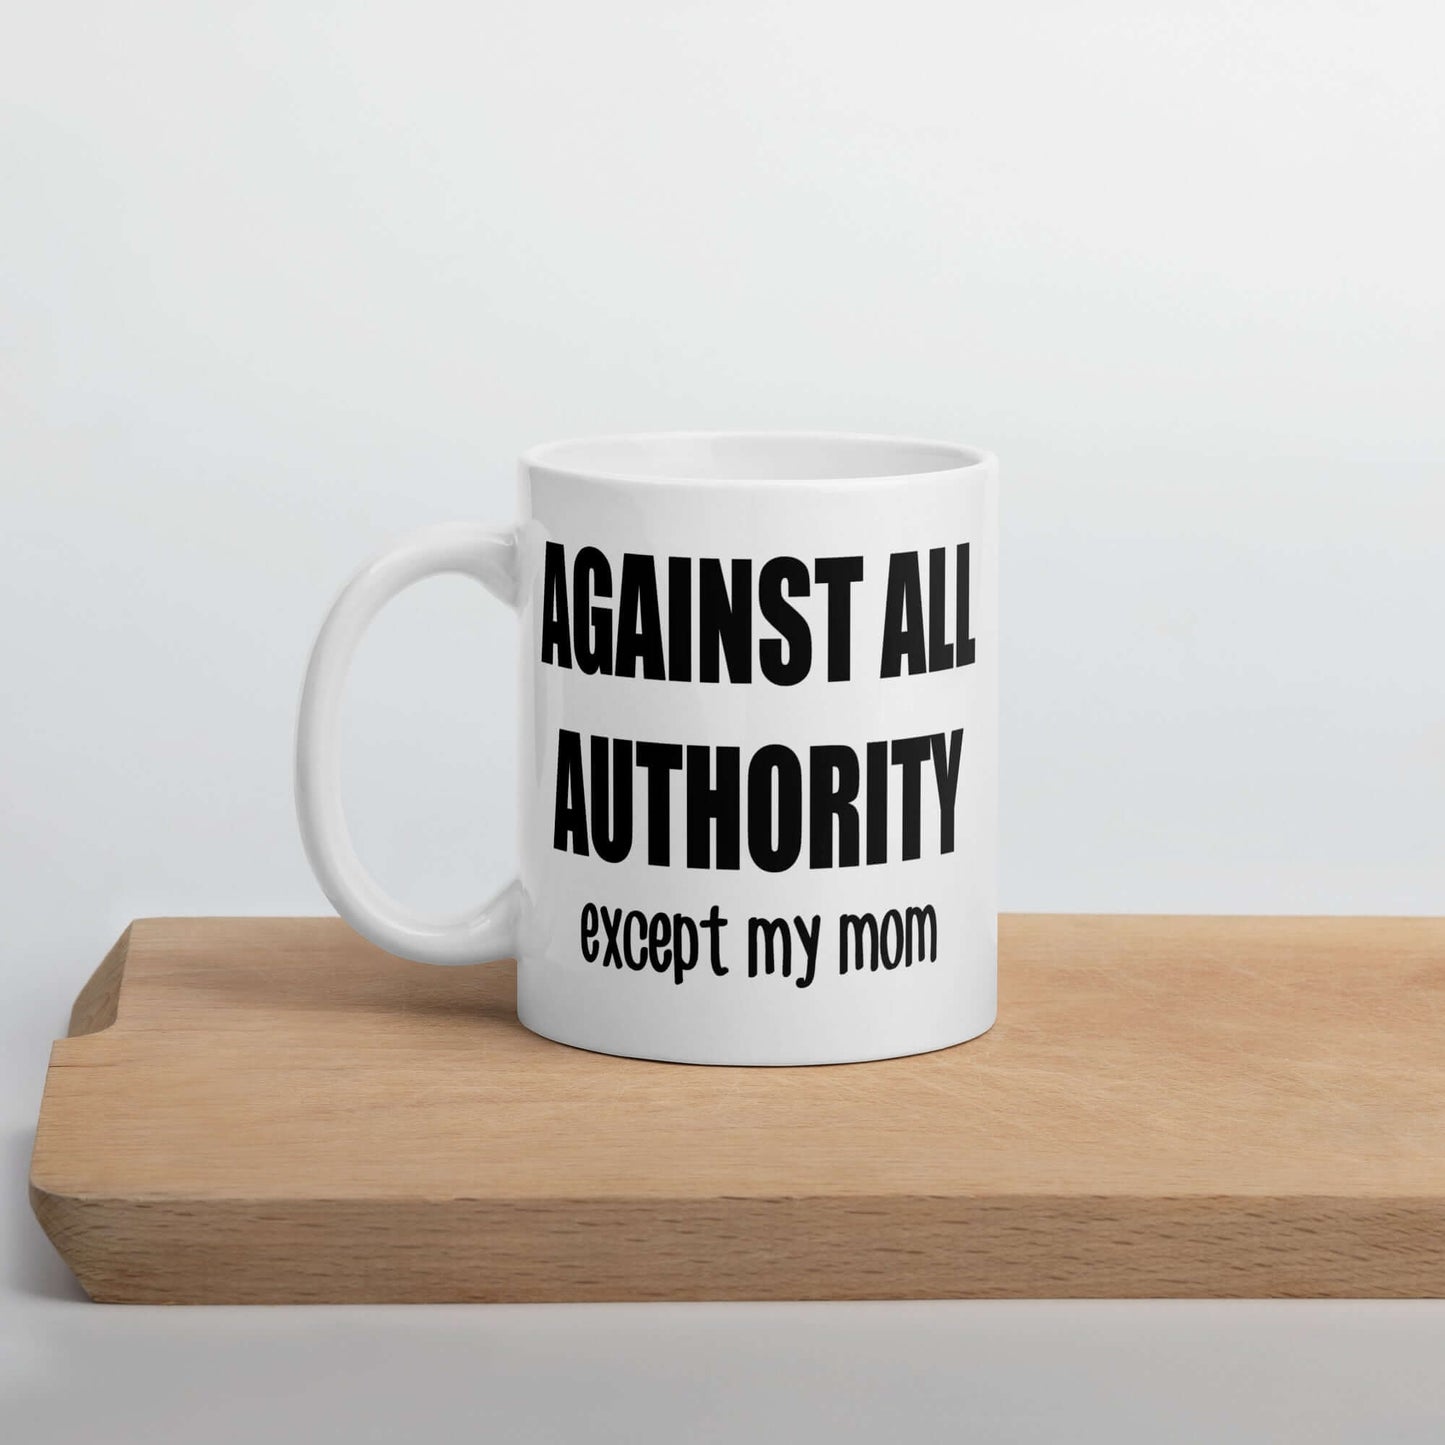 Against all authority except my mom ceramic mug